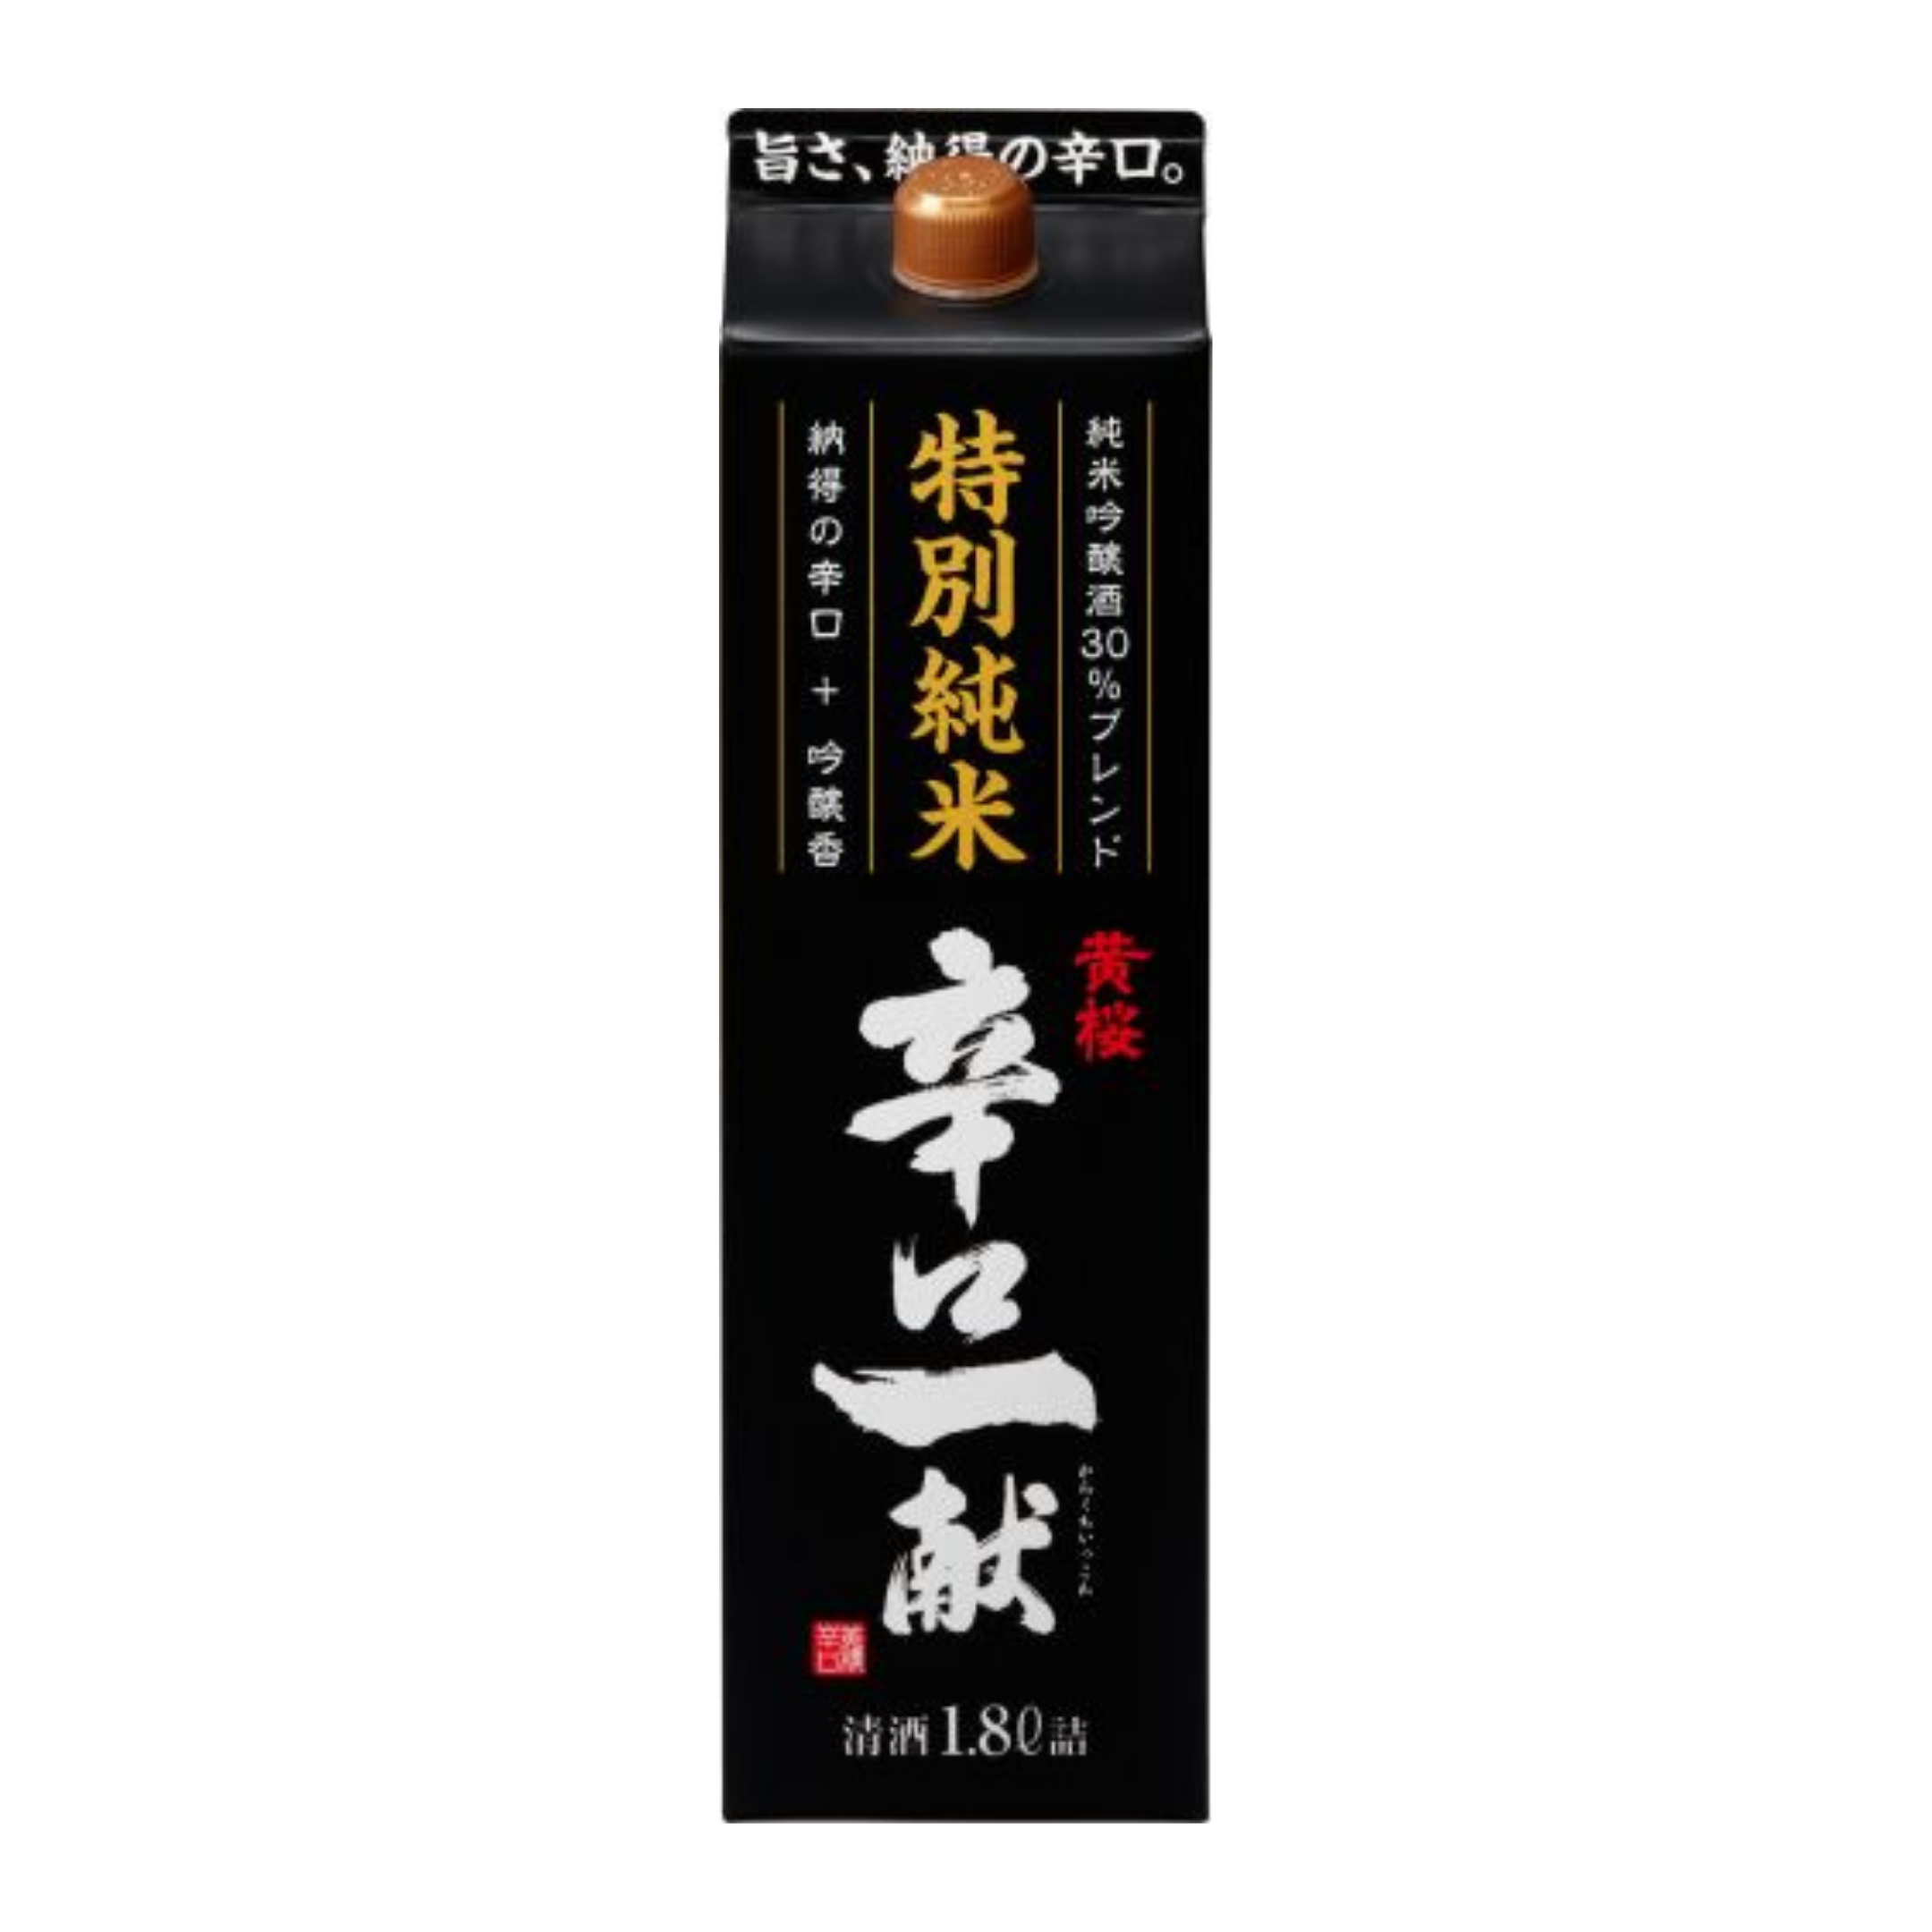 KIZAKURA KARAKUCHI IKKON 1.8L 05966 – Wismettac Asian Foods, Inc.